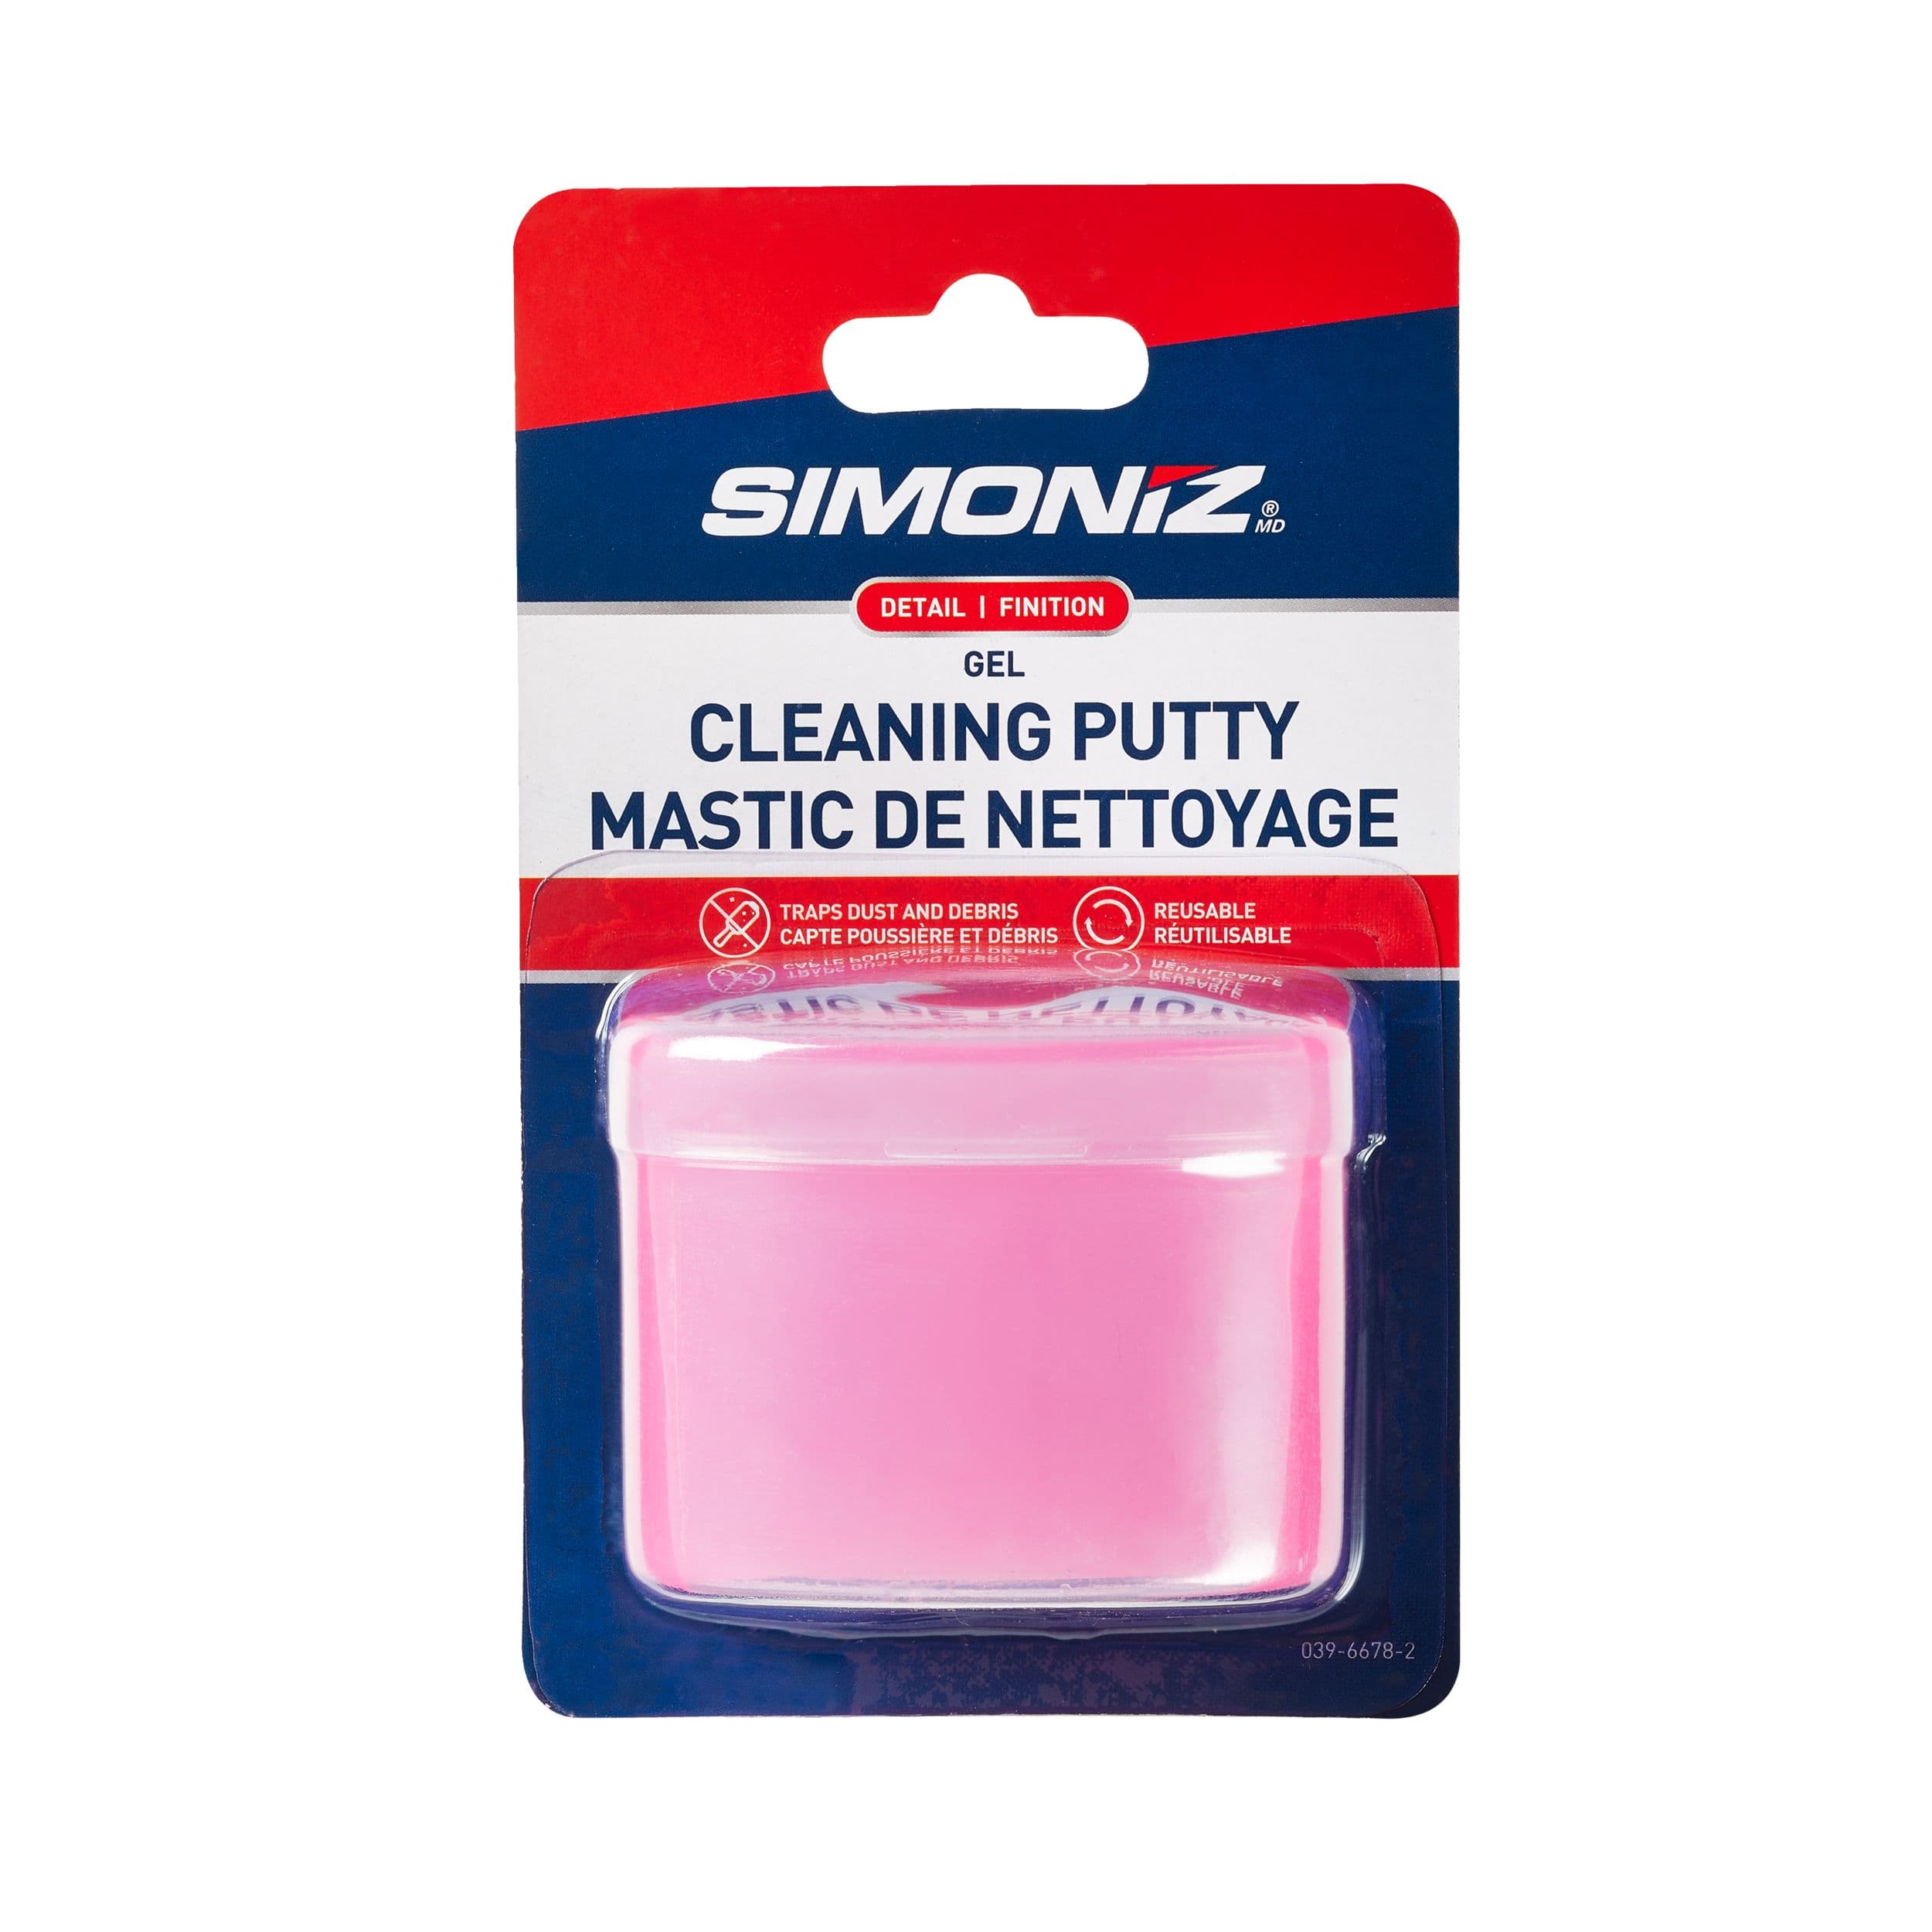 SIMONIZ Multi-Purpose Gel Cleaning Putty